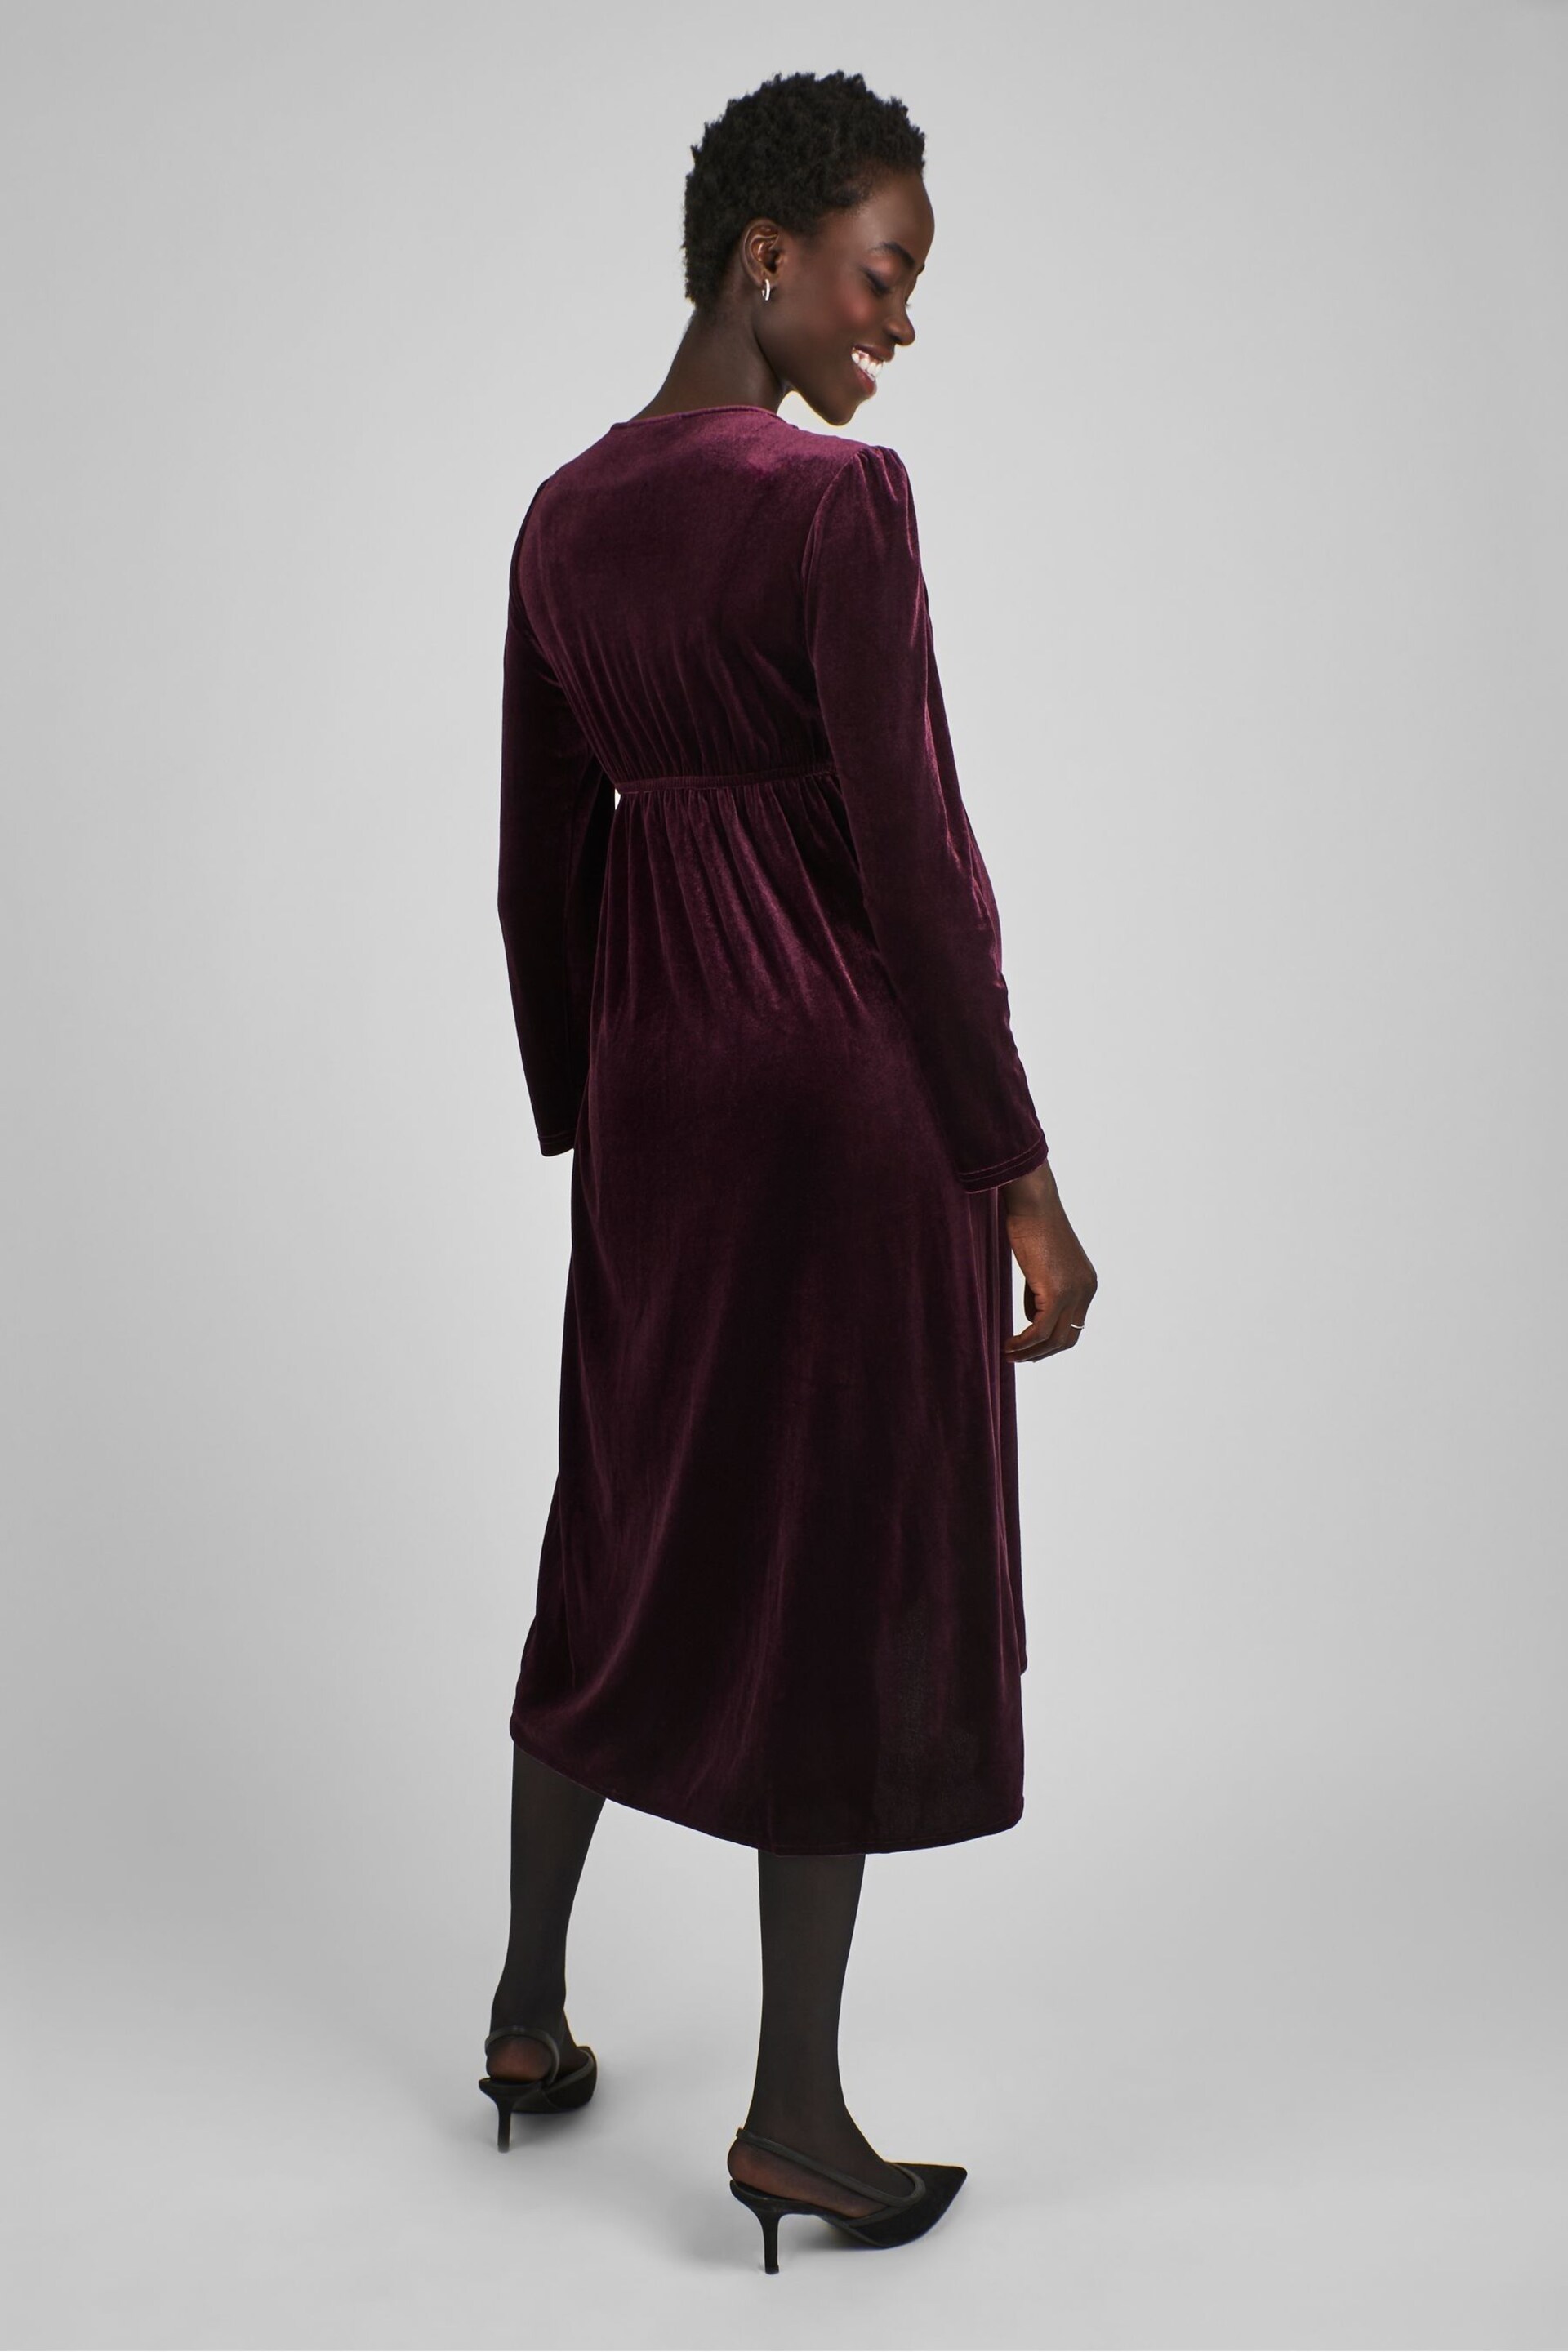 JoJo Maman Bébé Burgundy Red Velvet Maternity & Nursing Wrap Dress - Image 3 of 5